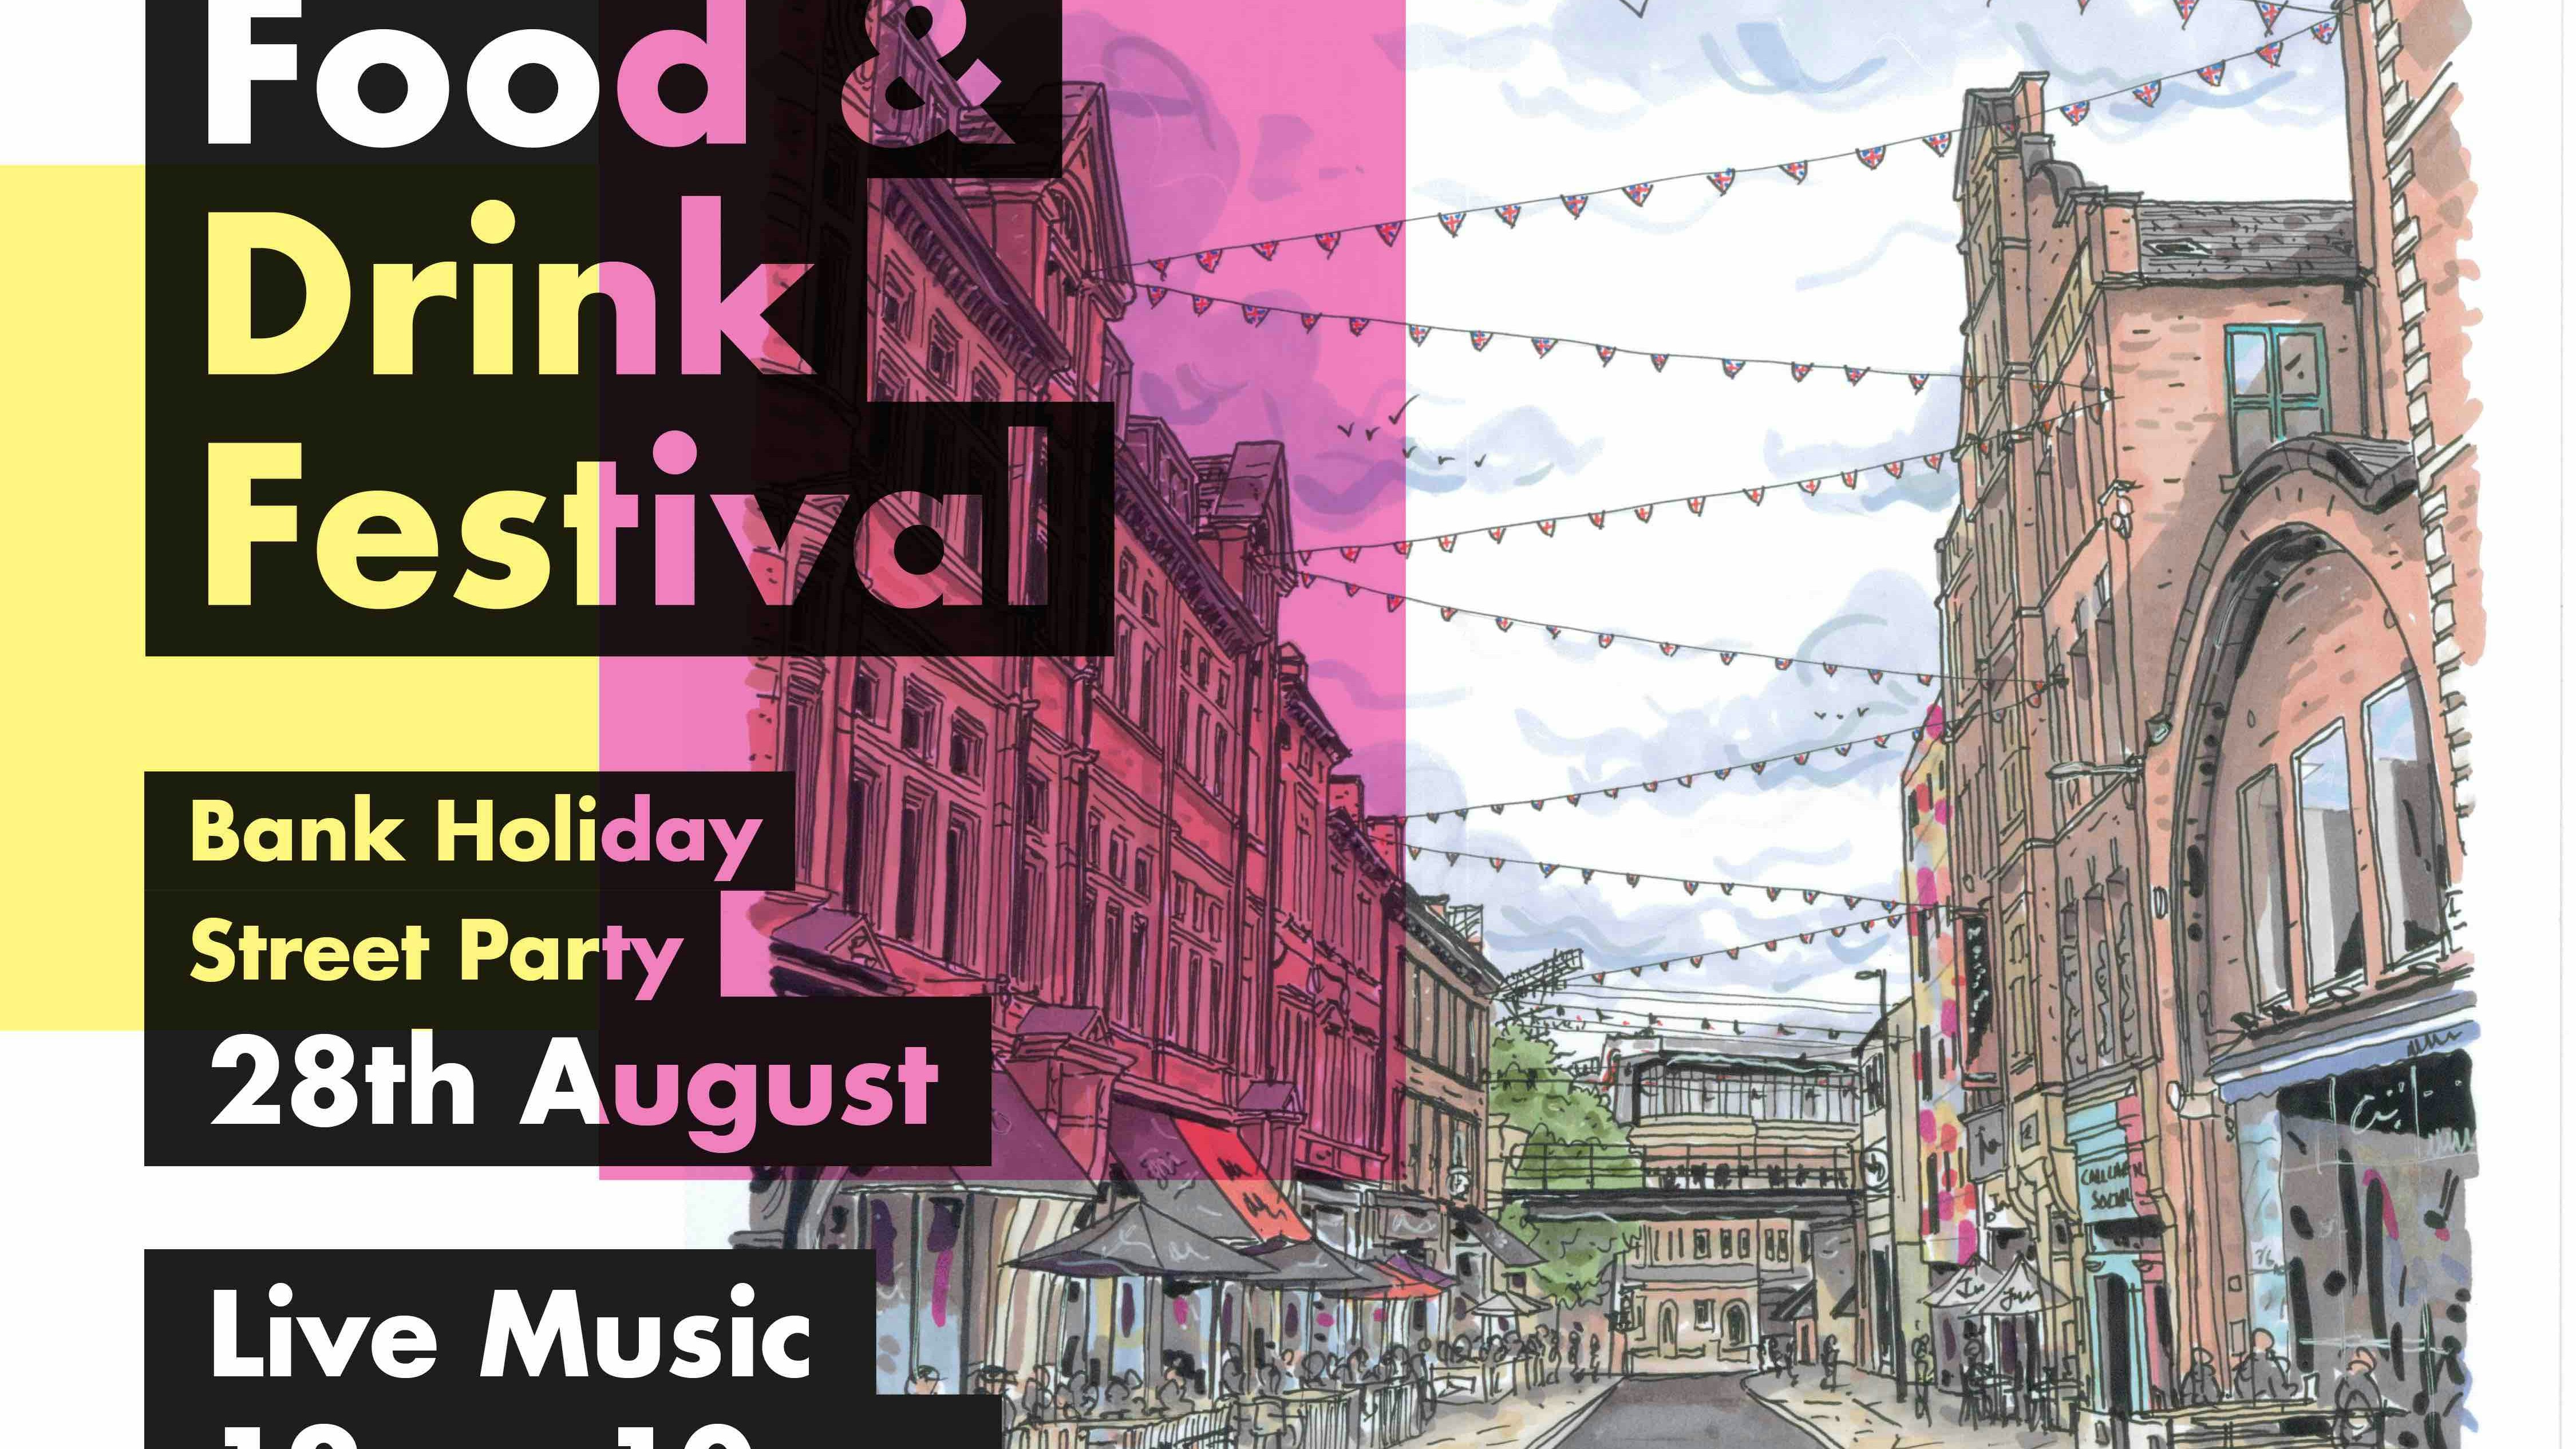 Call Lane Bank Holiday Food & Drink Festival